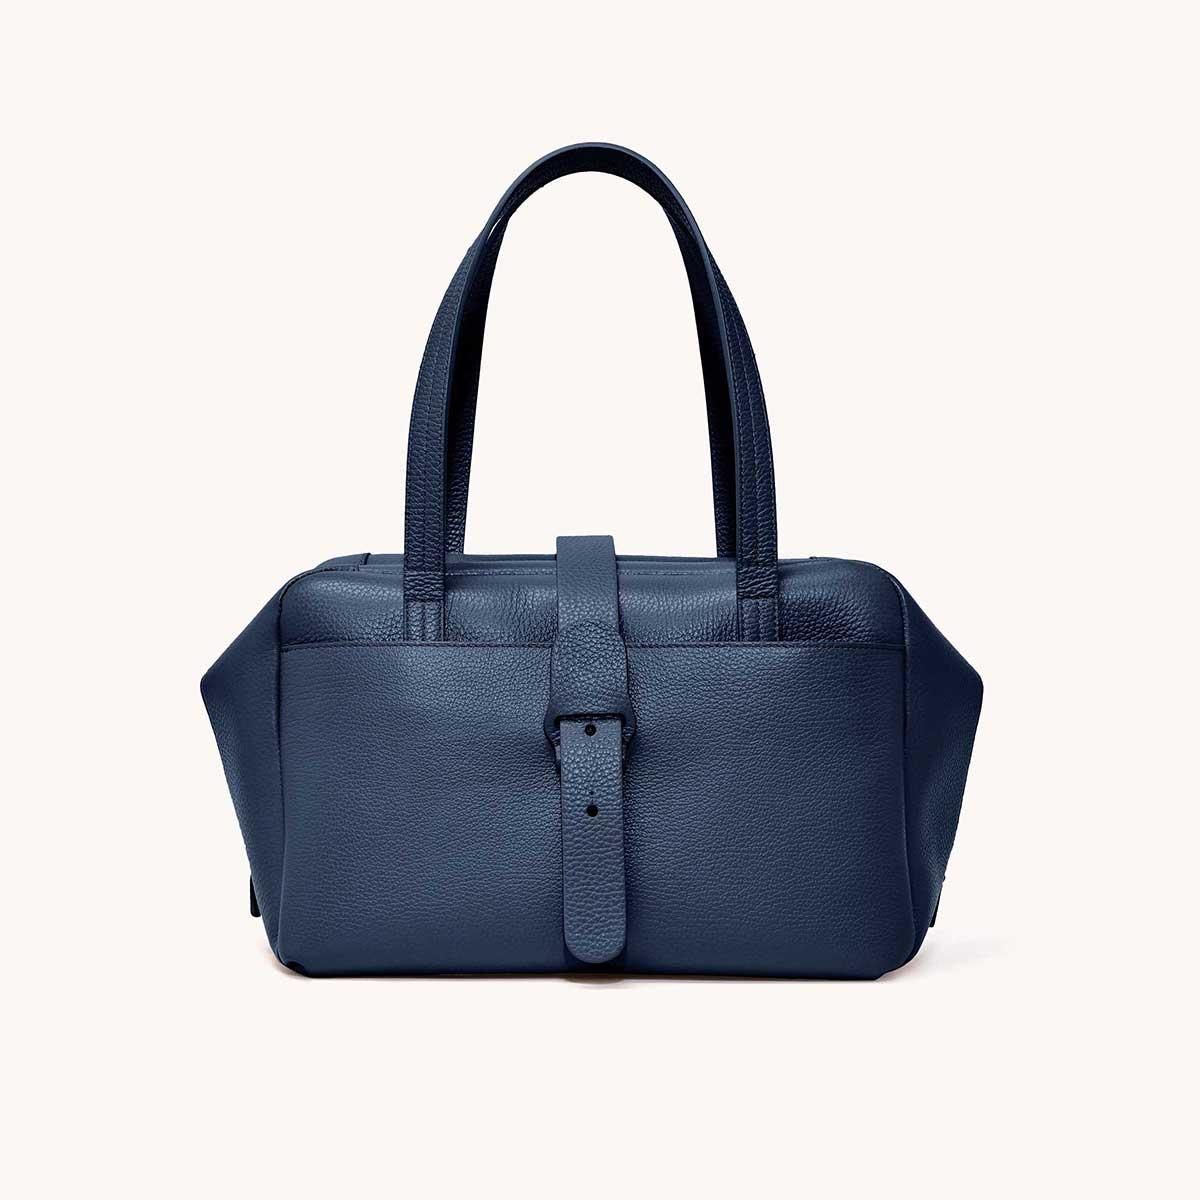 Senreve Alunna Leather Top Handle Bag in Blue